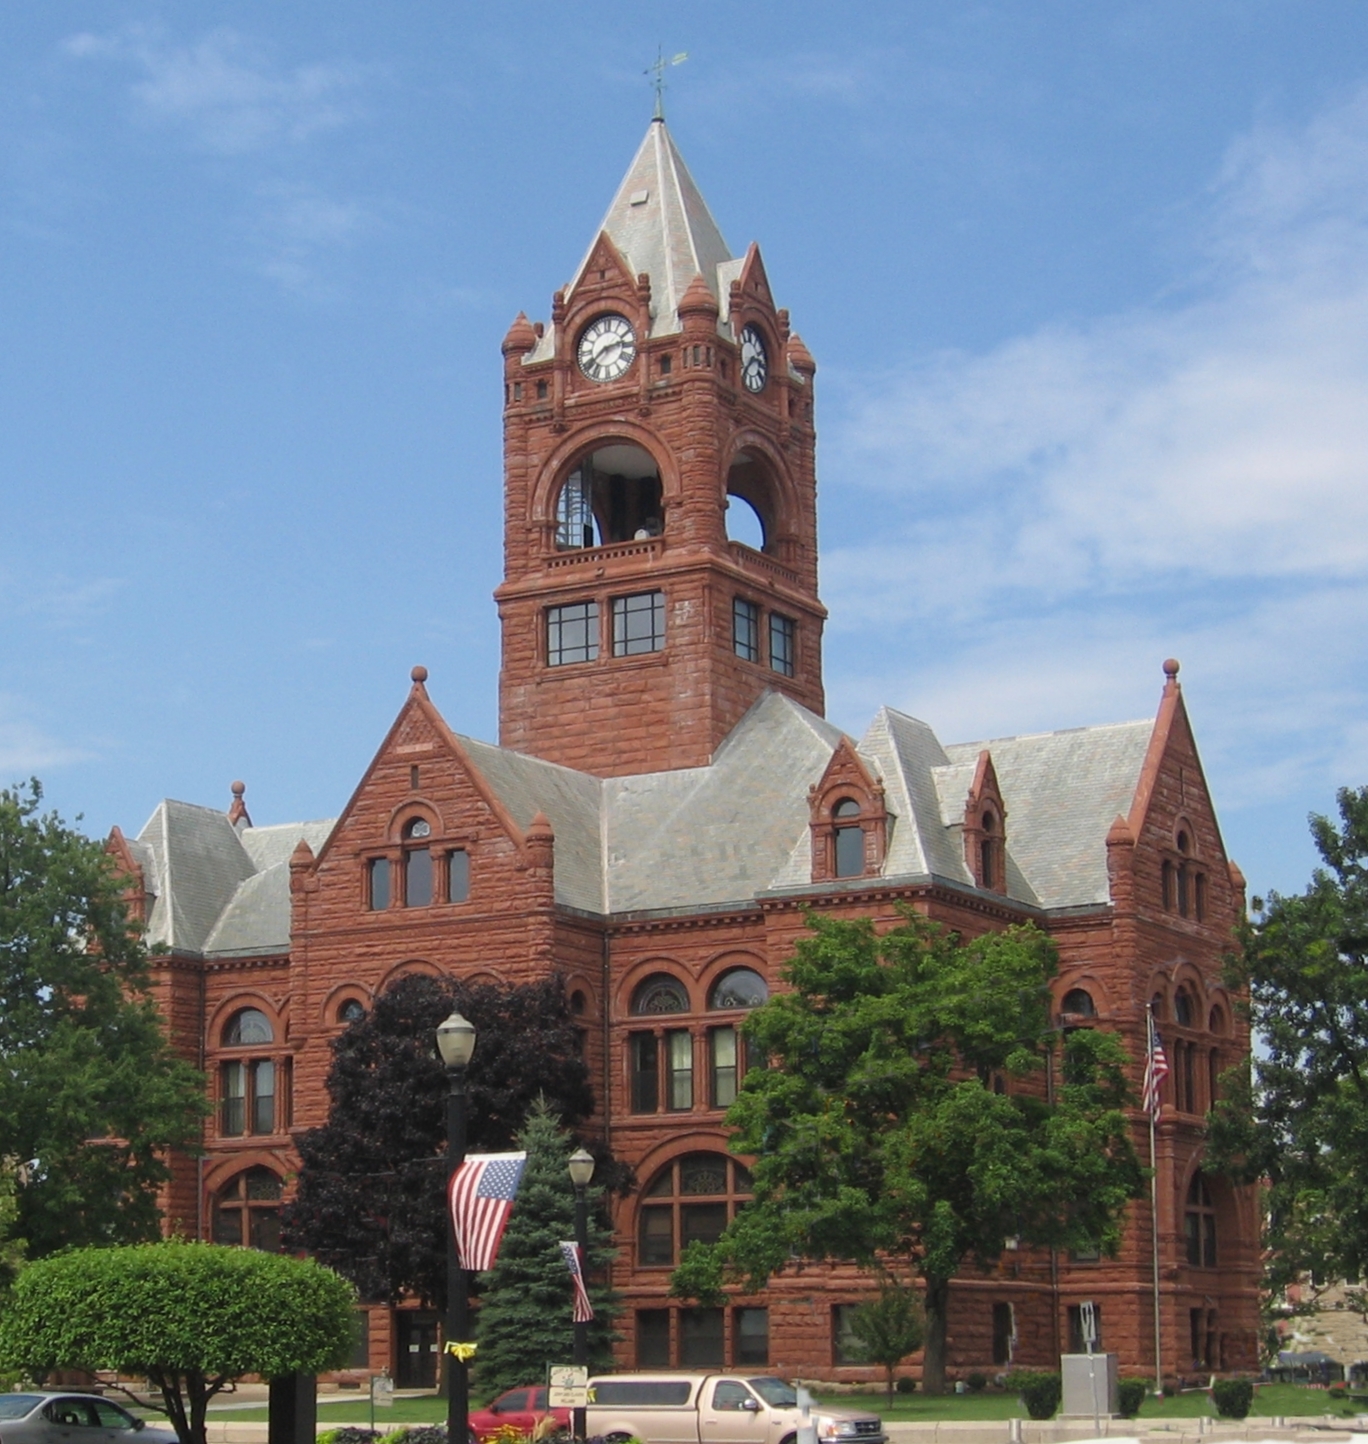 https://upload.wikimedia.org/wikipedia/commons/1/1e/Laporte_County_Indiana_courthouse_2.jpg